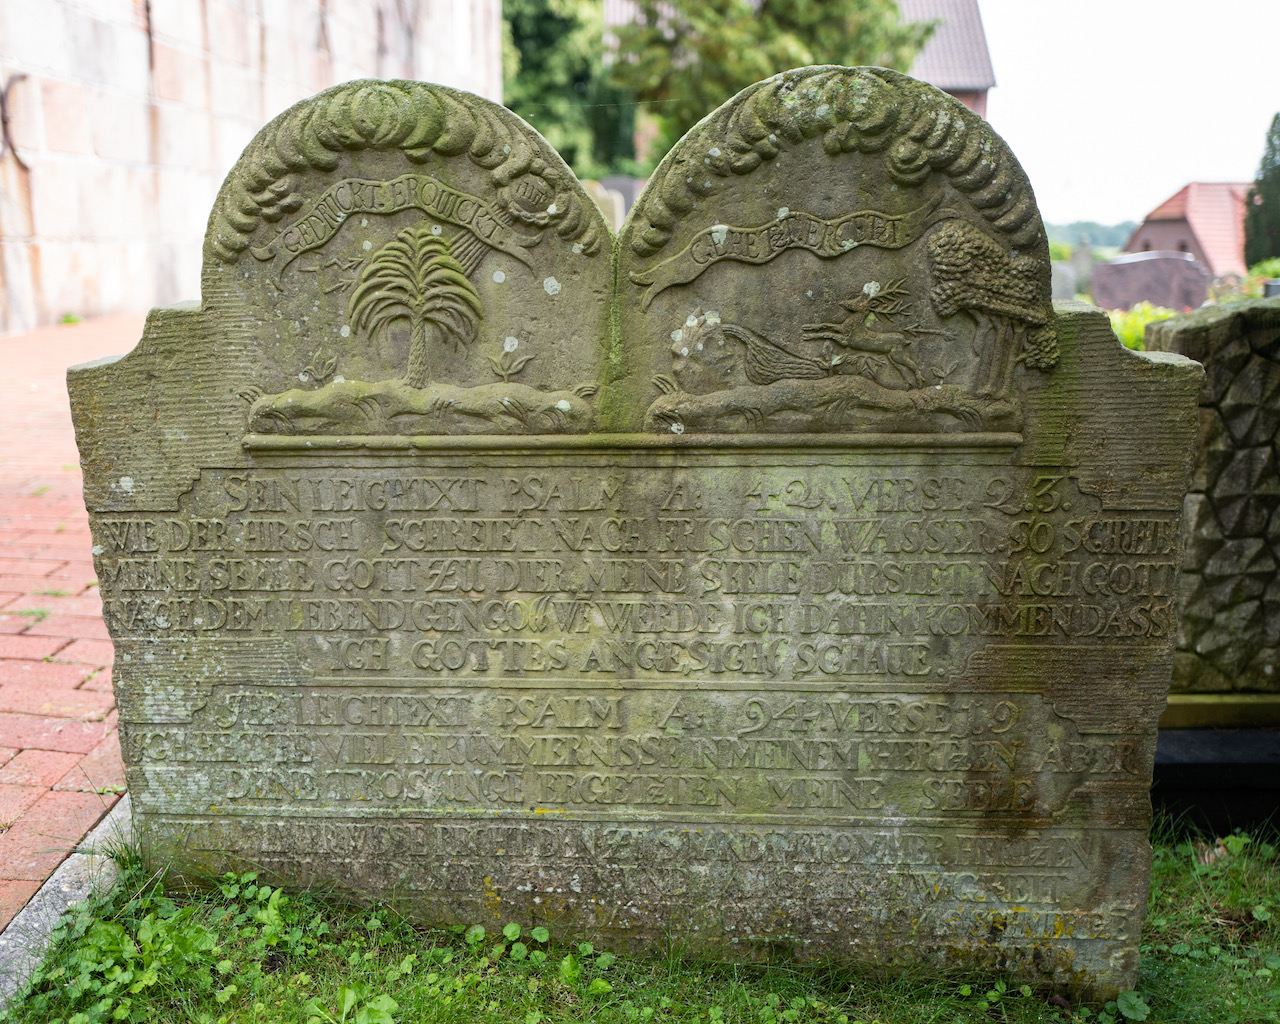 Grabstein mit der Inschrift: Gedrückt. Erquickt - Gehetzt. Ergetzt